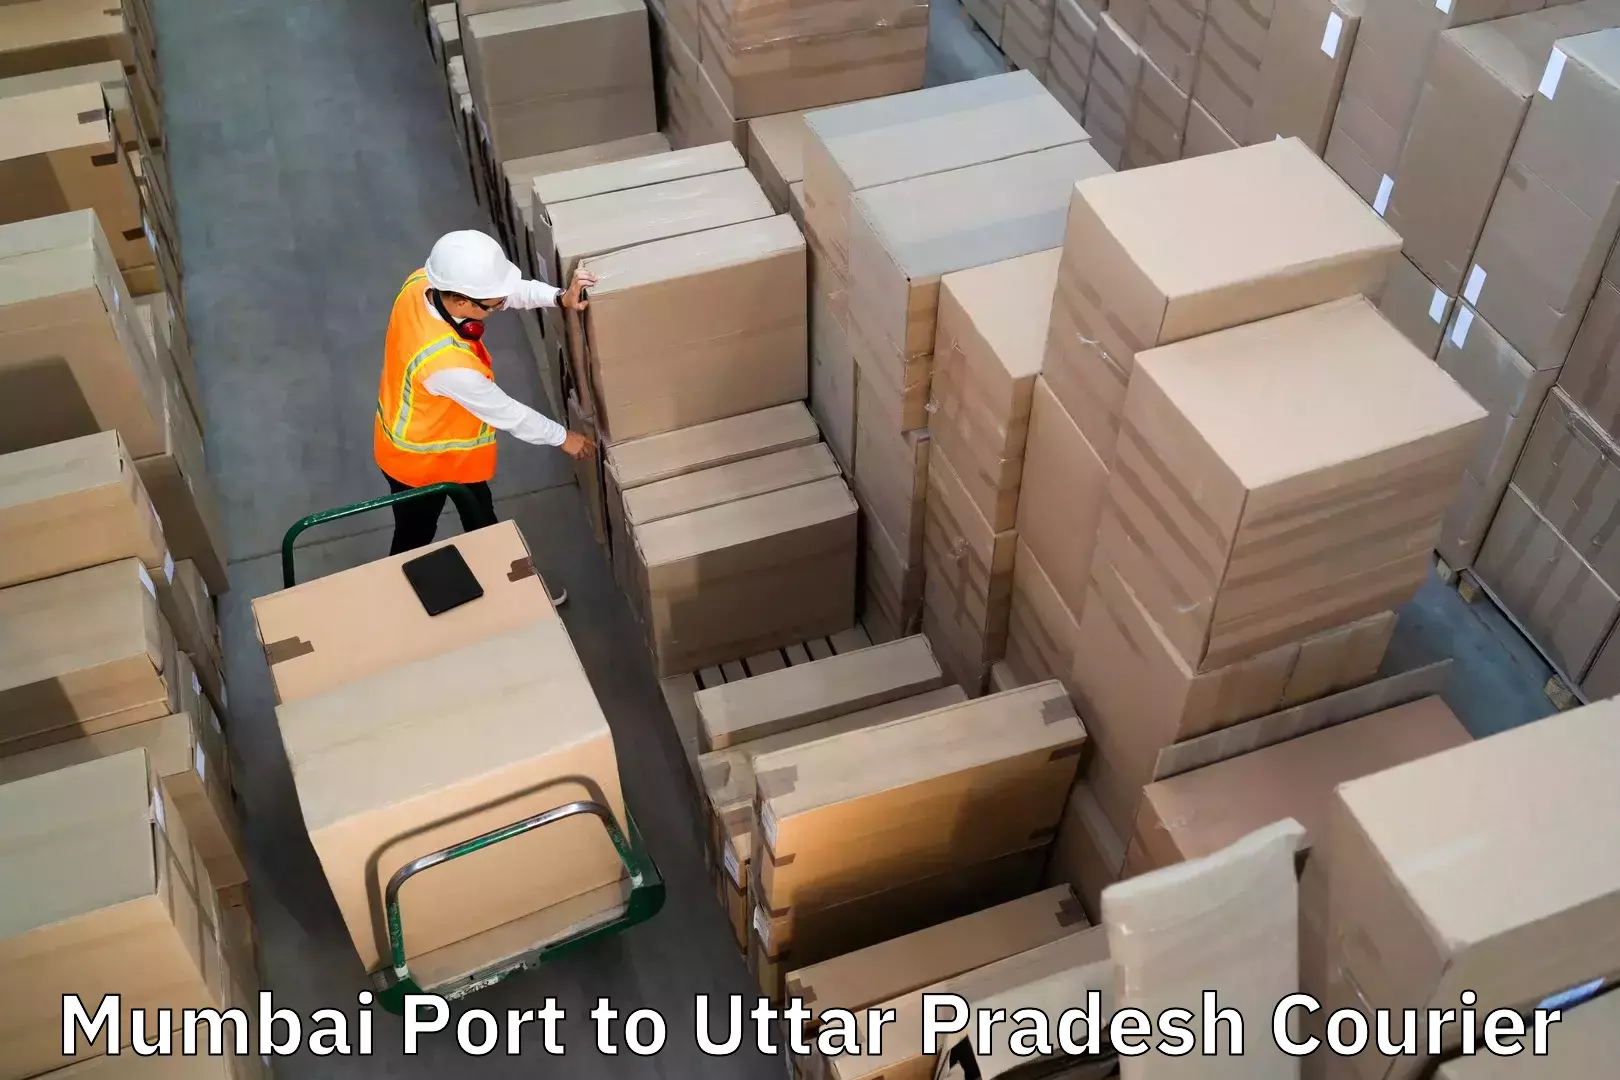 Holiday season luggage delivery Mumbai Port to Khurja